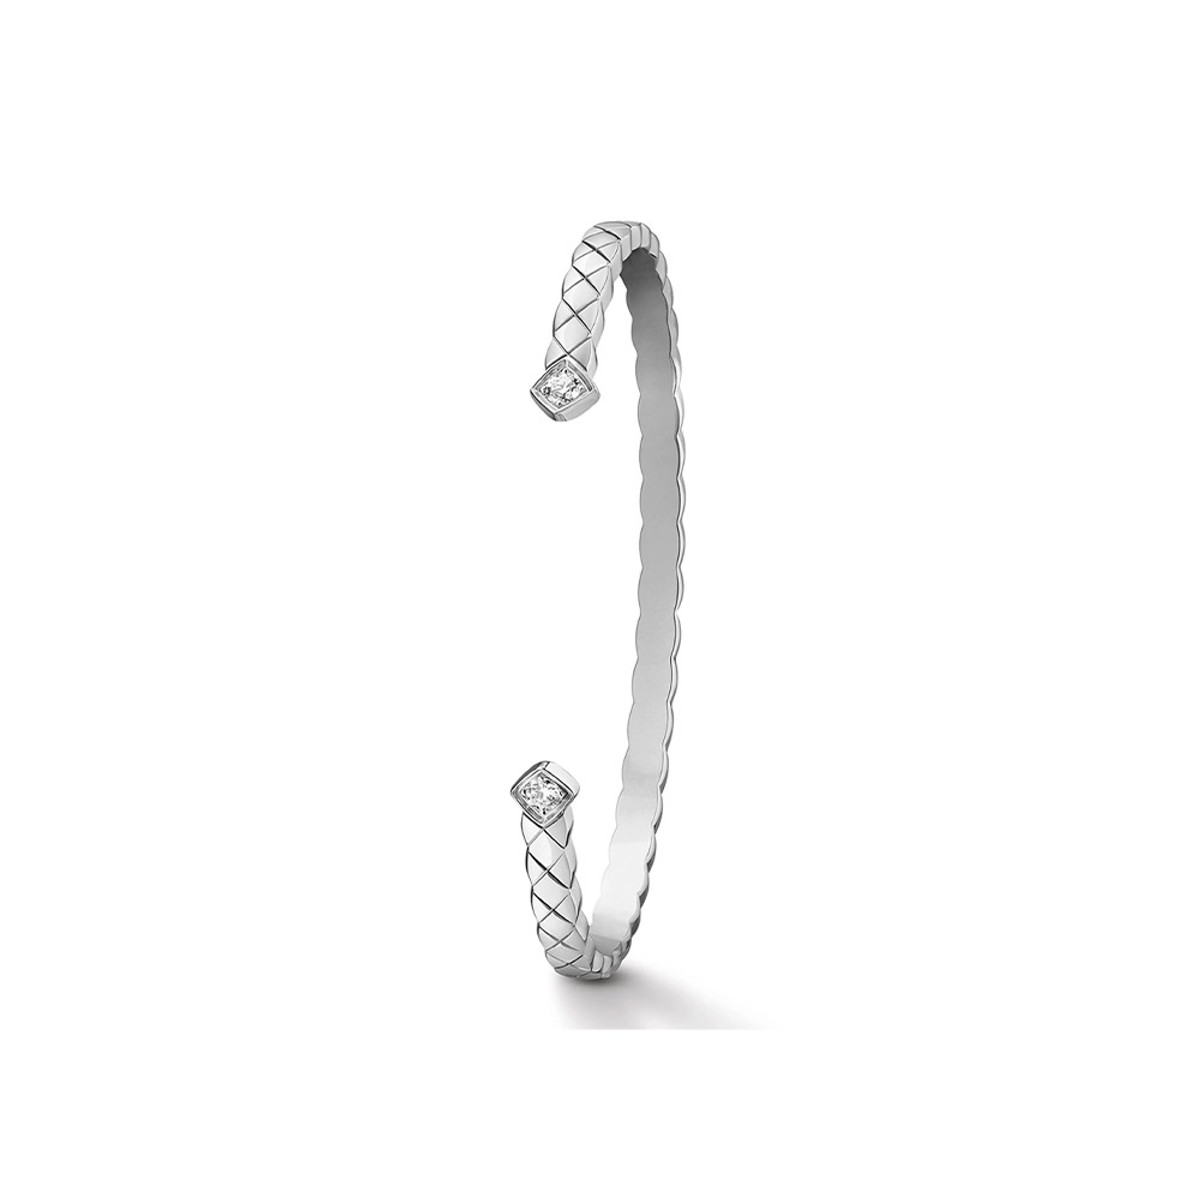 Chanel 18K White Gold Coco Crush Diamond Open Cuff Bracelet-29641 Product Image